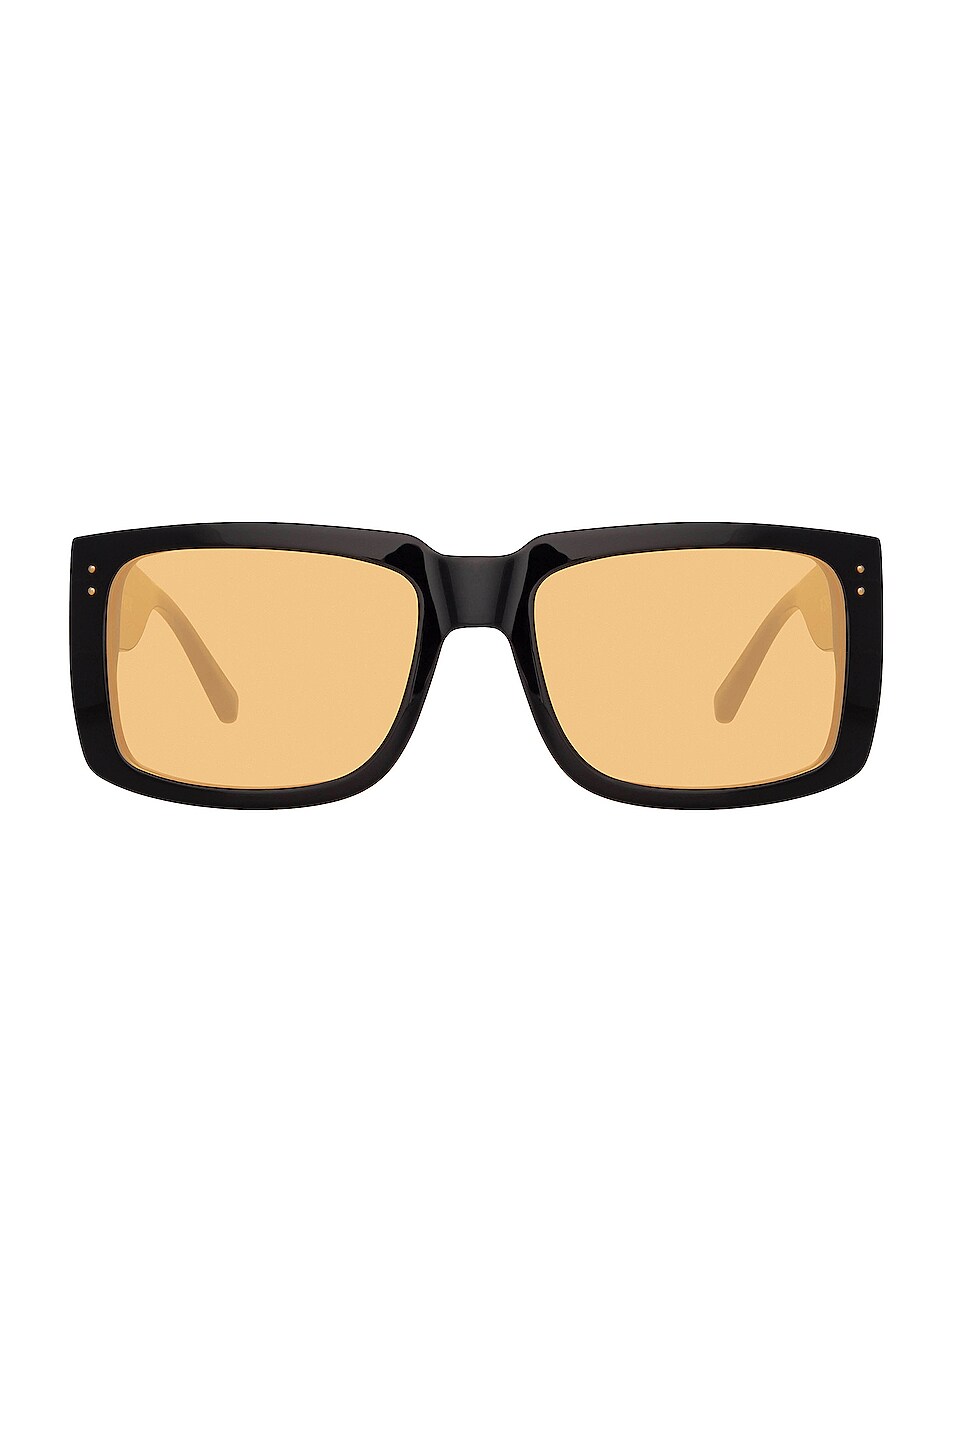 Image 1 of Linda Farrow Morrison Sunglasses in Black, Yellow Gold & Orange